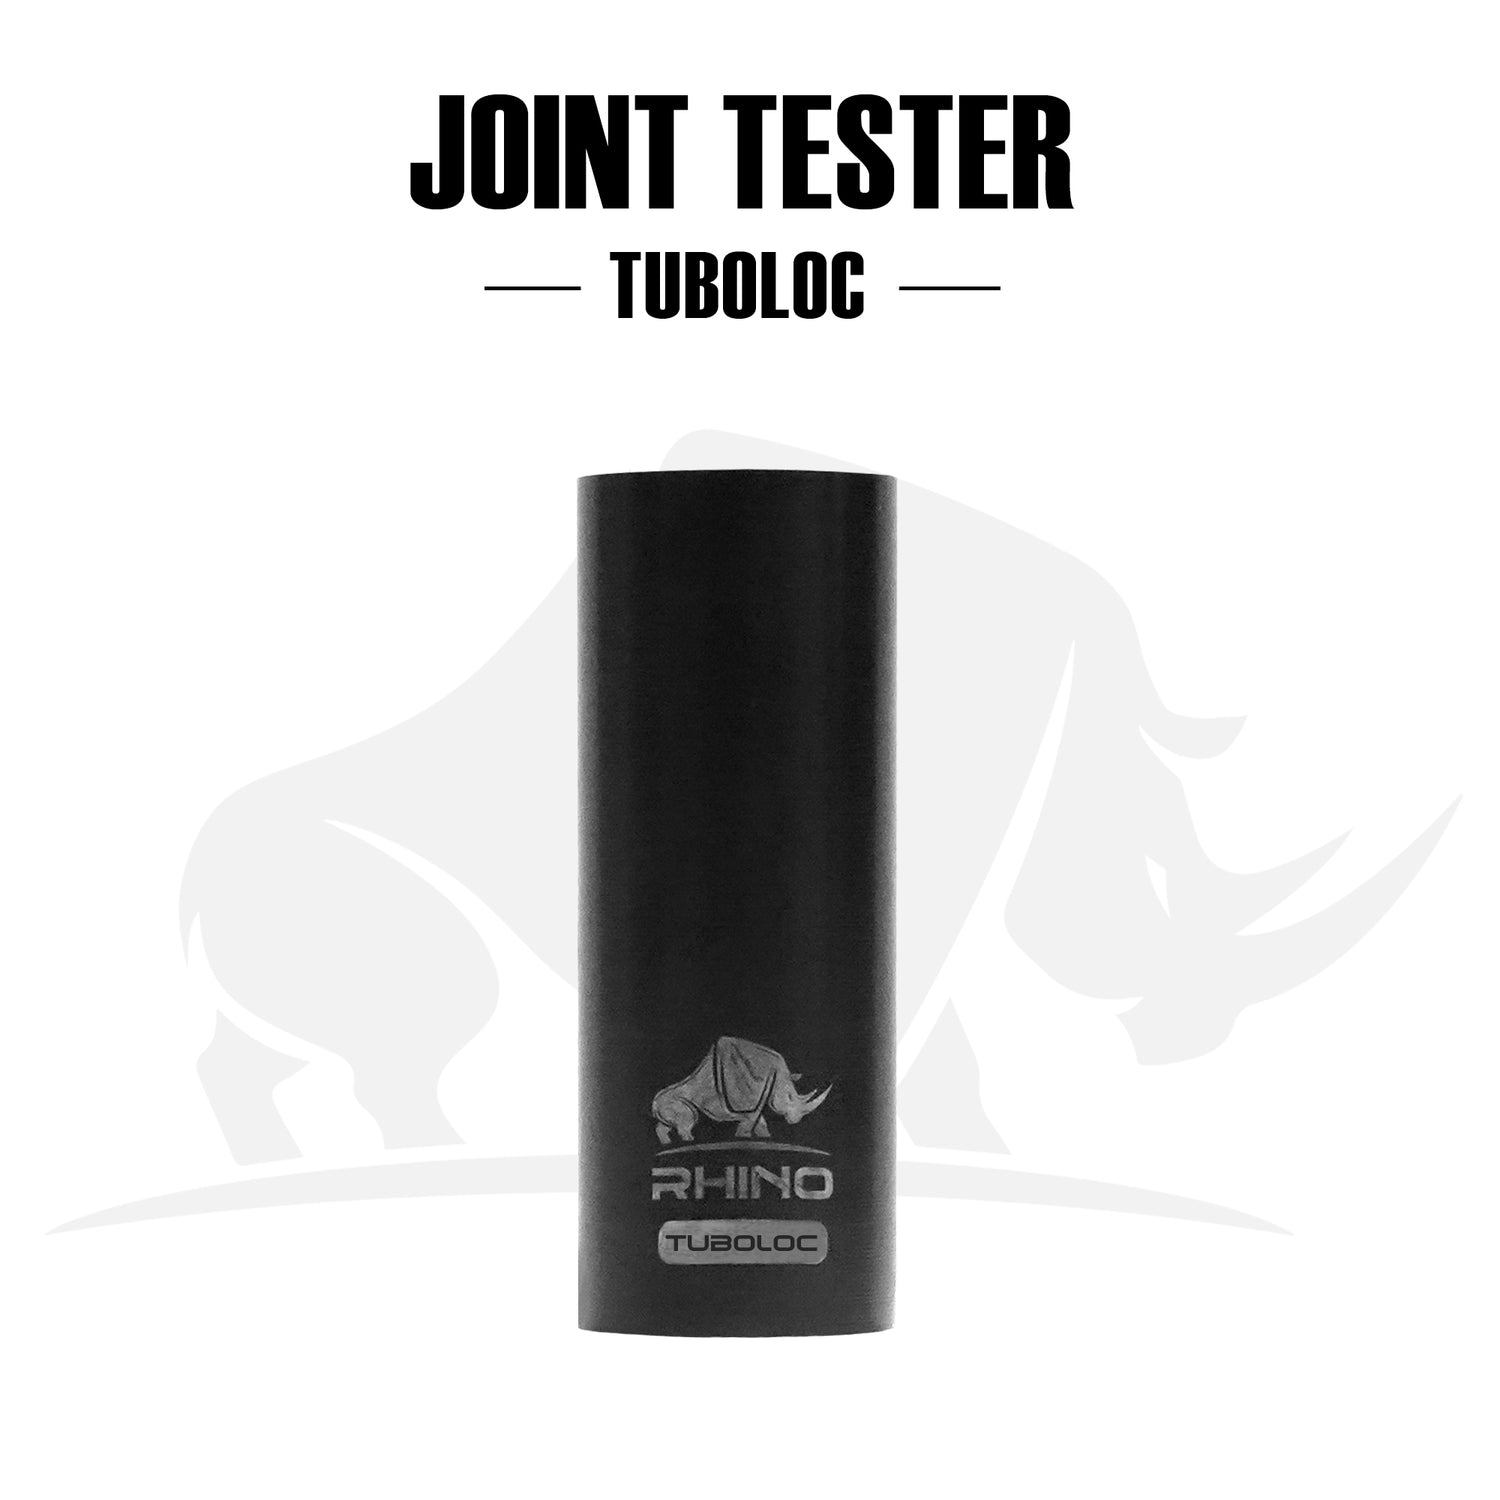 RHINO Billiards Joint Tester - Tuboloc